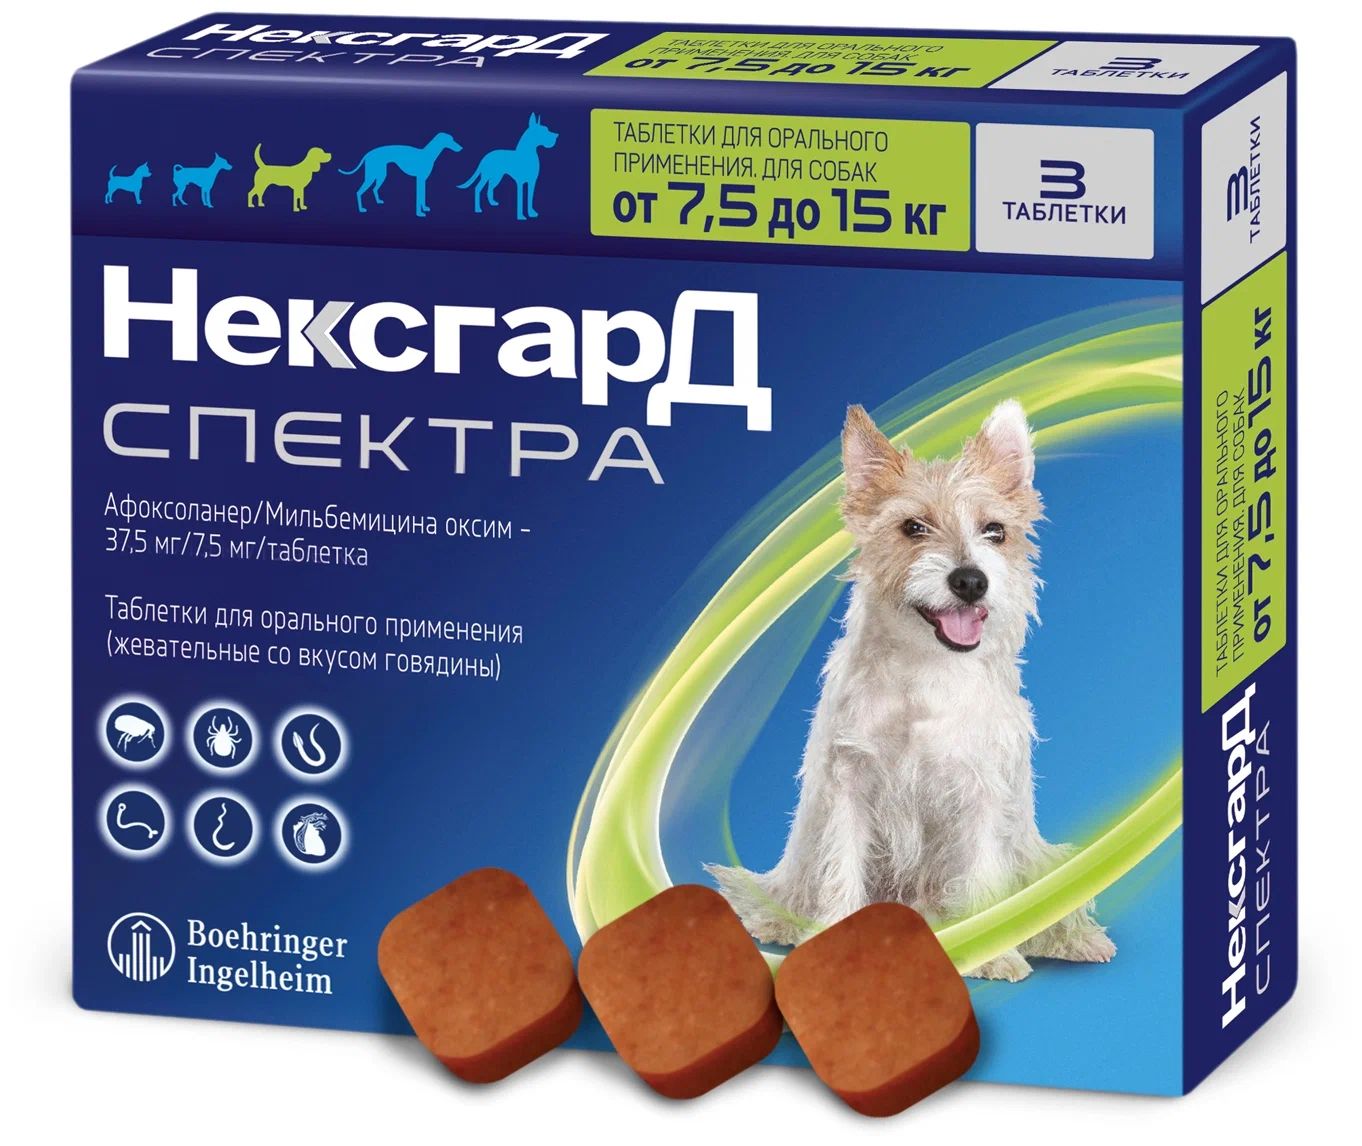 Таблетки нексгард для собак купить. НЕКСГАРД спектра для собак 7.5-15 кг. НЕКСГАРД для собак. Нетсгард спектра для собак. Фронтлайн НЕКСГАРД спектра для собак.